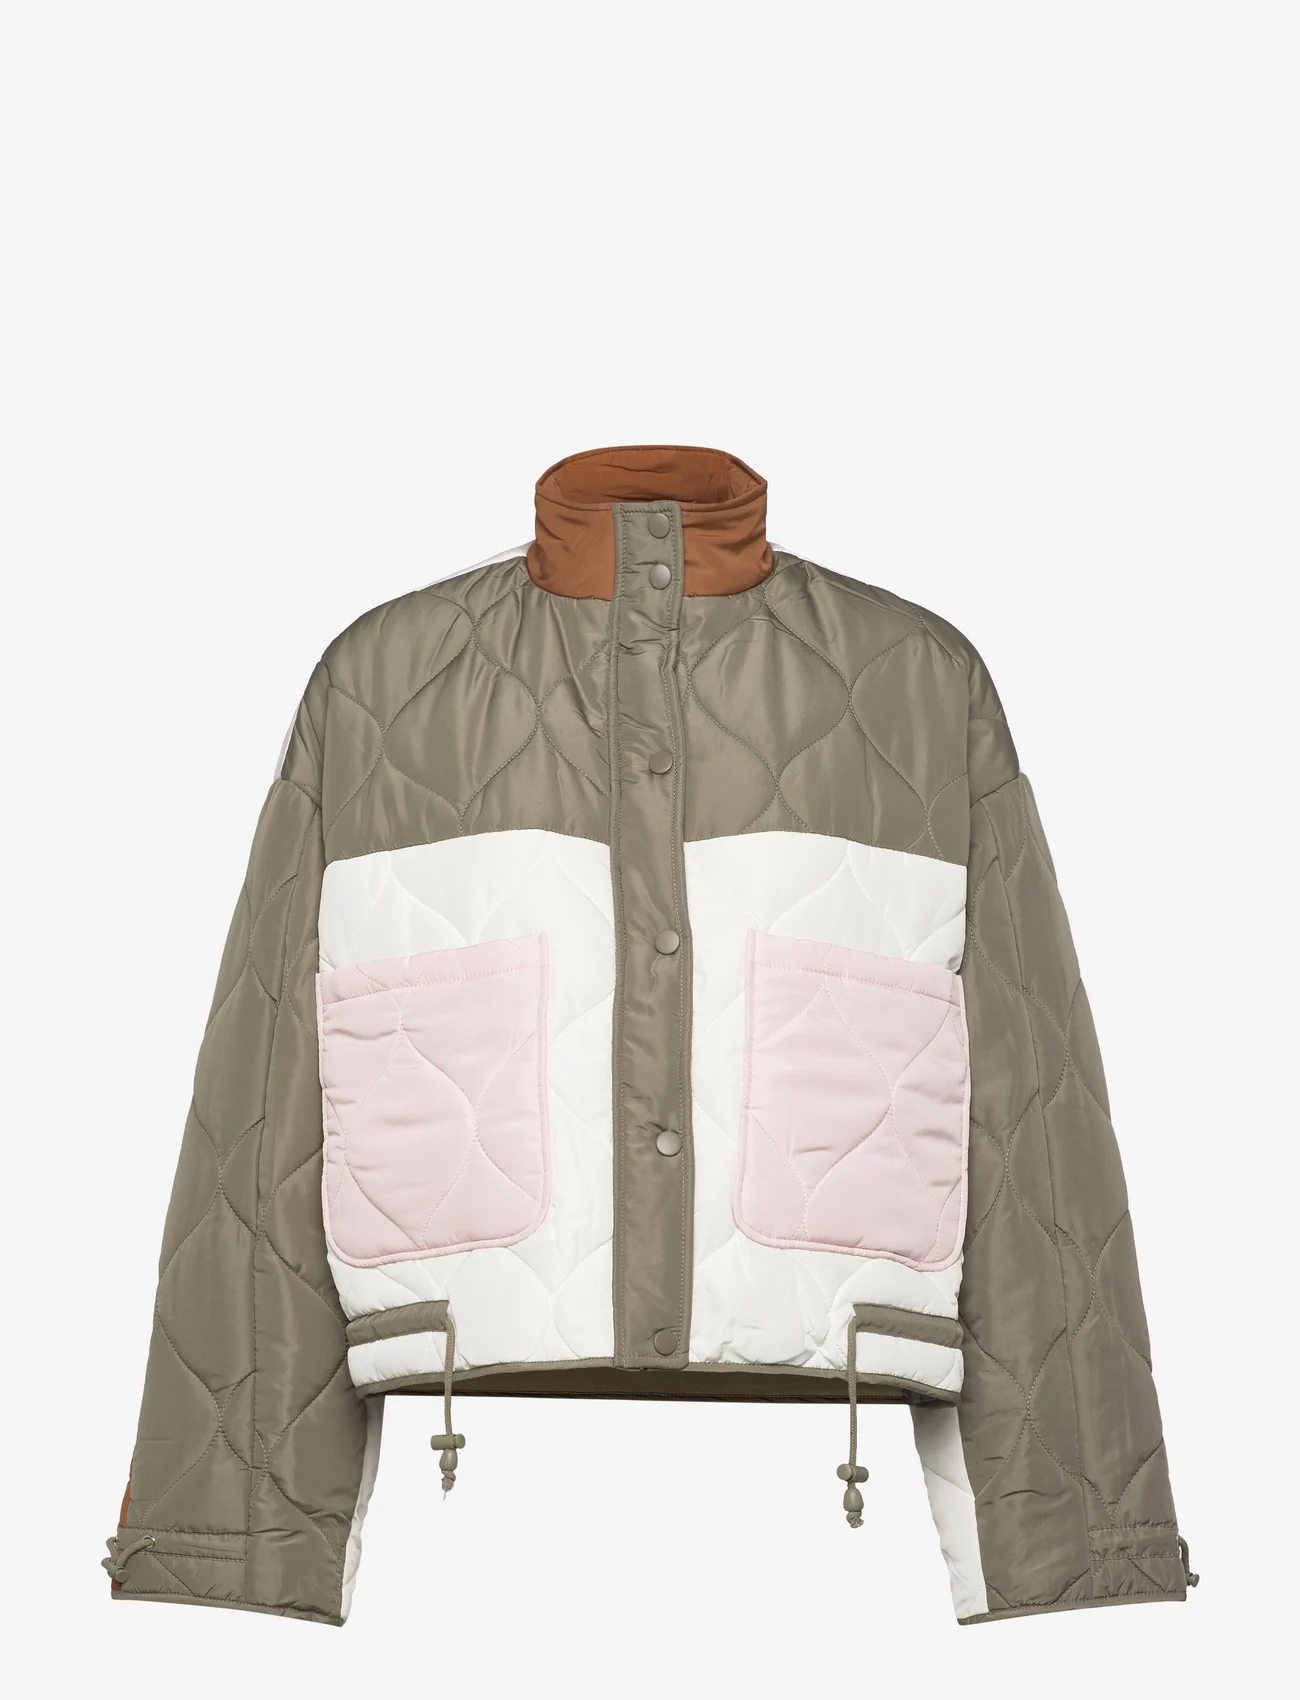 Coster Copenhagen - Patchwork padded jacket - lentejassen - patchwork color - 0